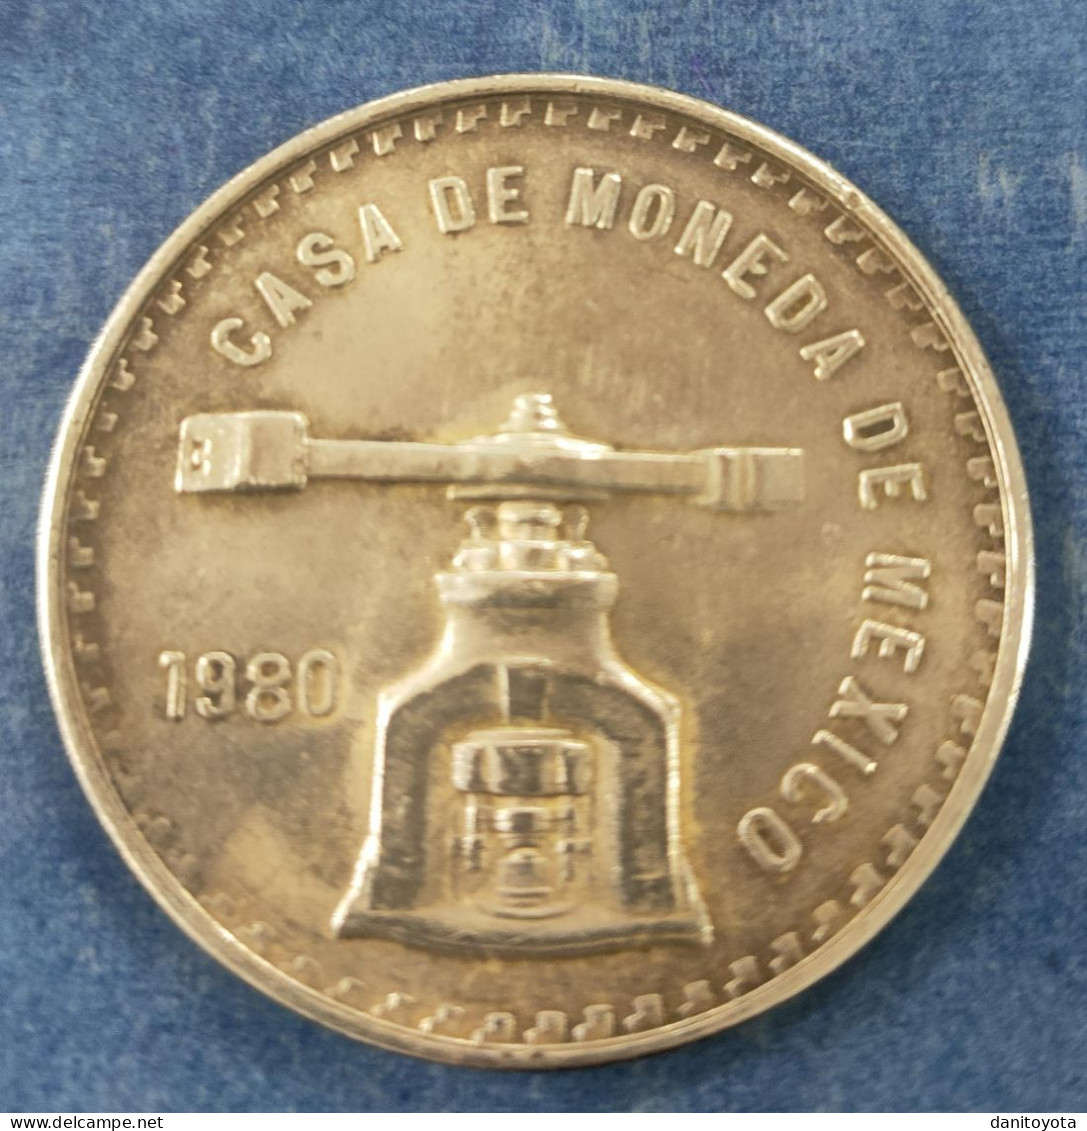 MEXICO. AÑO 1980. 1 ONZA TROY CASA DE MEXICO. PESO 33,6 GR - México